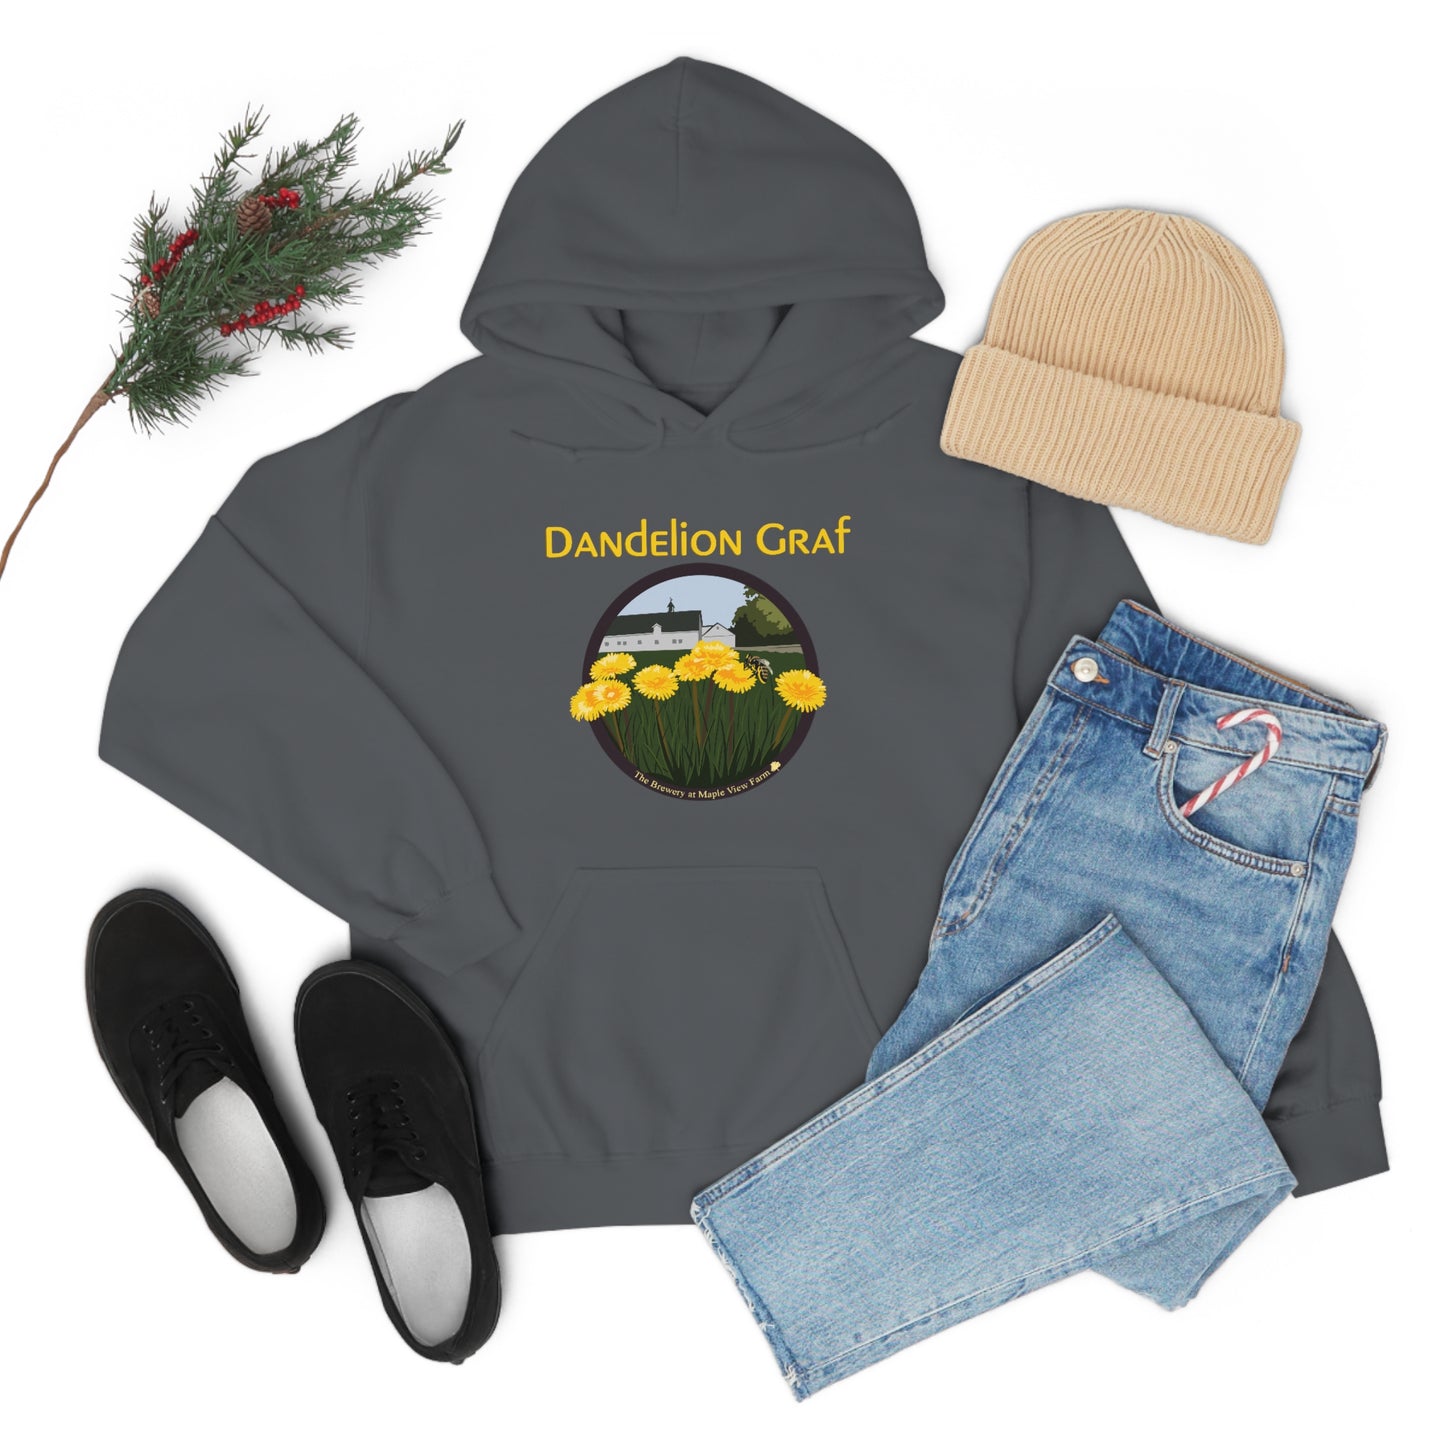 Dandelion Graf Hooded Sweatshirt